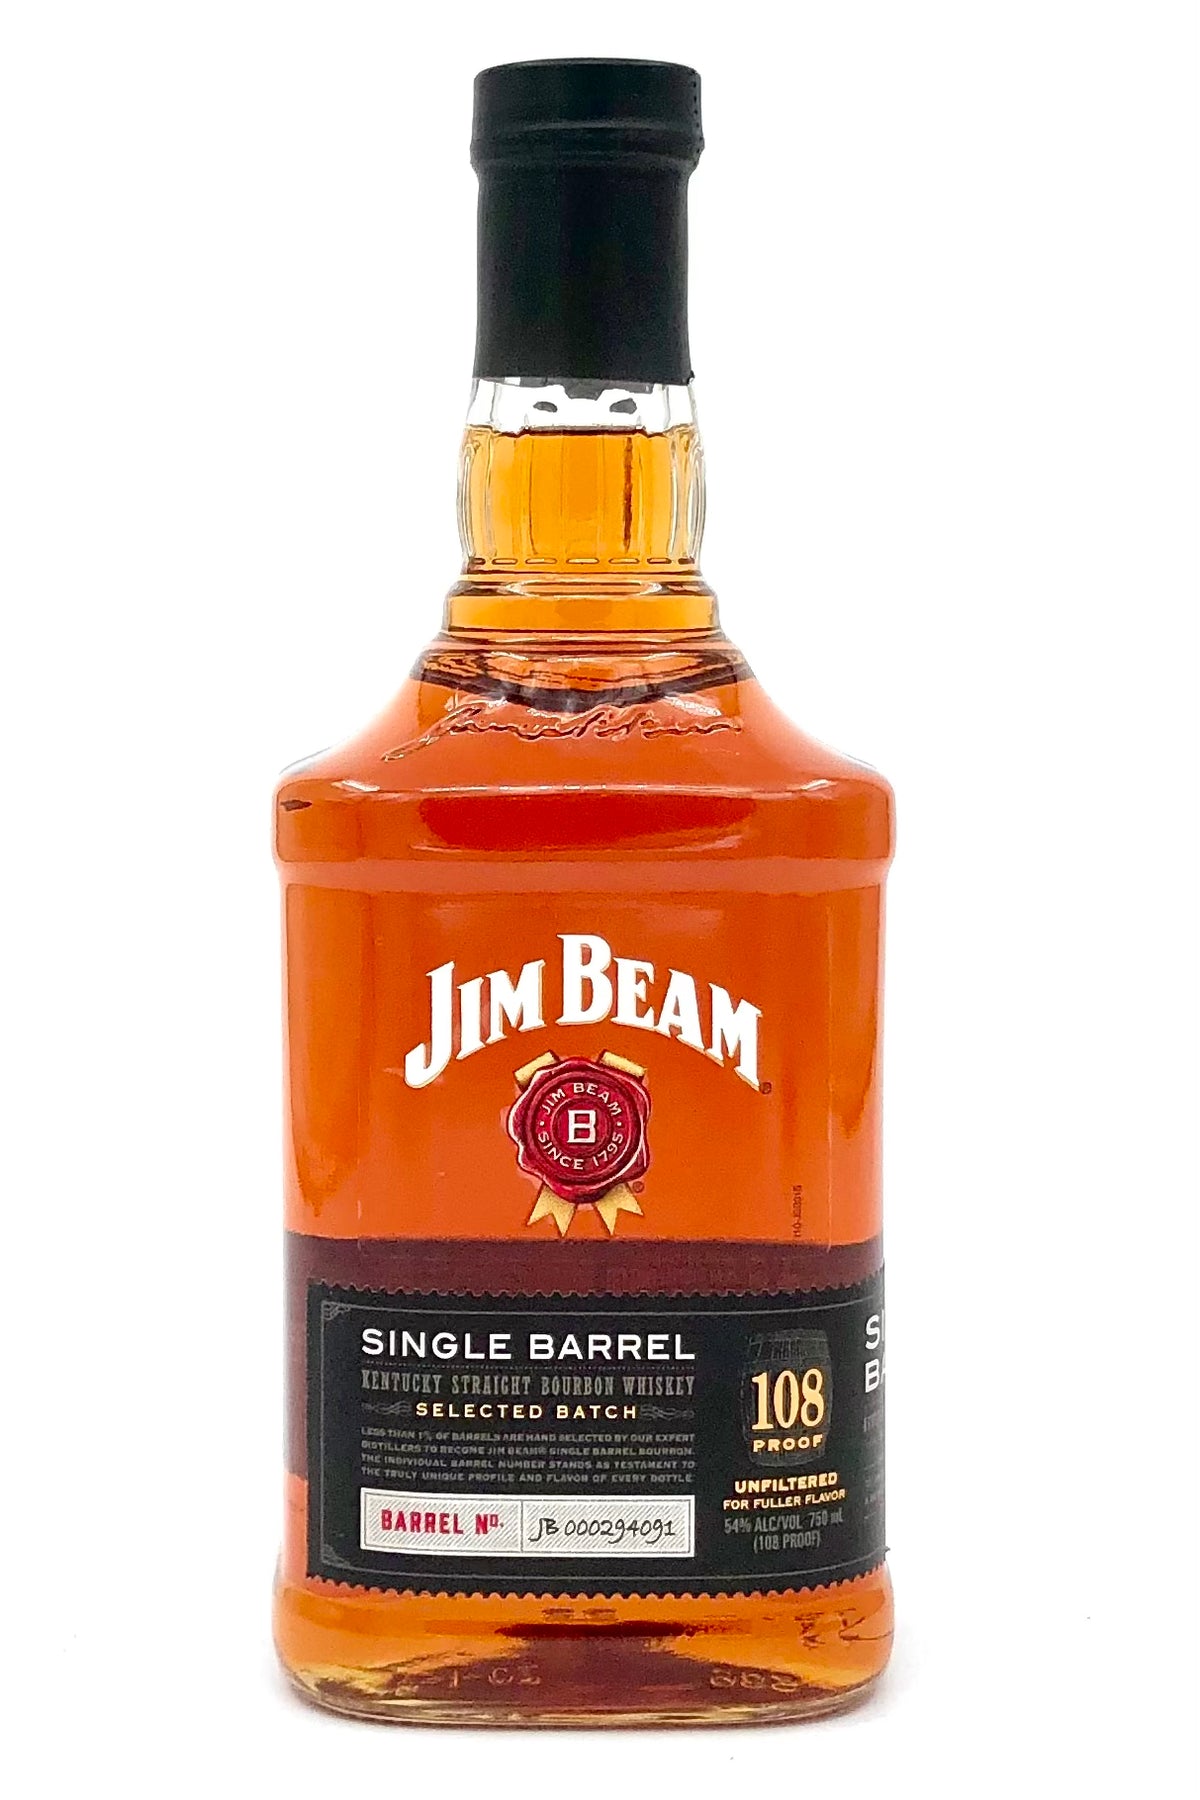 Jim Beam Single Barrel Bourbon Whiskey 108 Proof